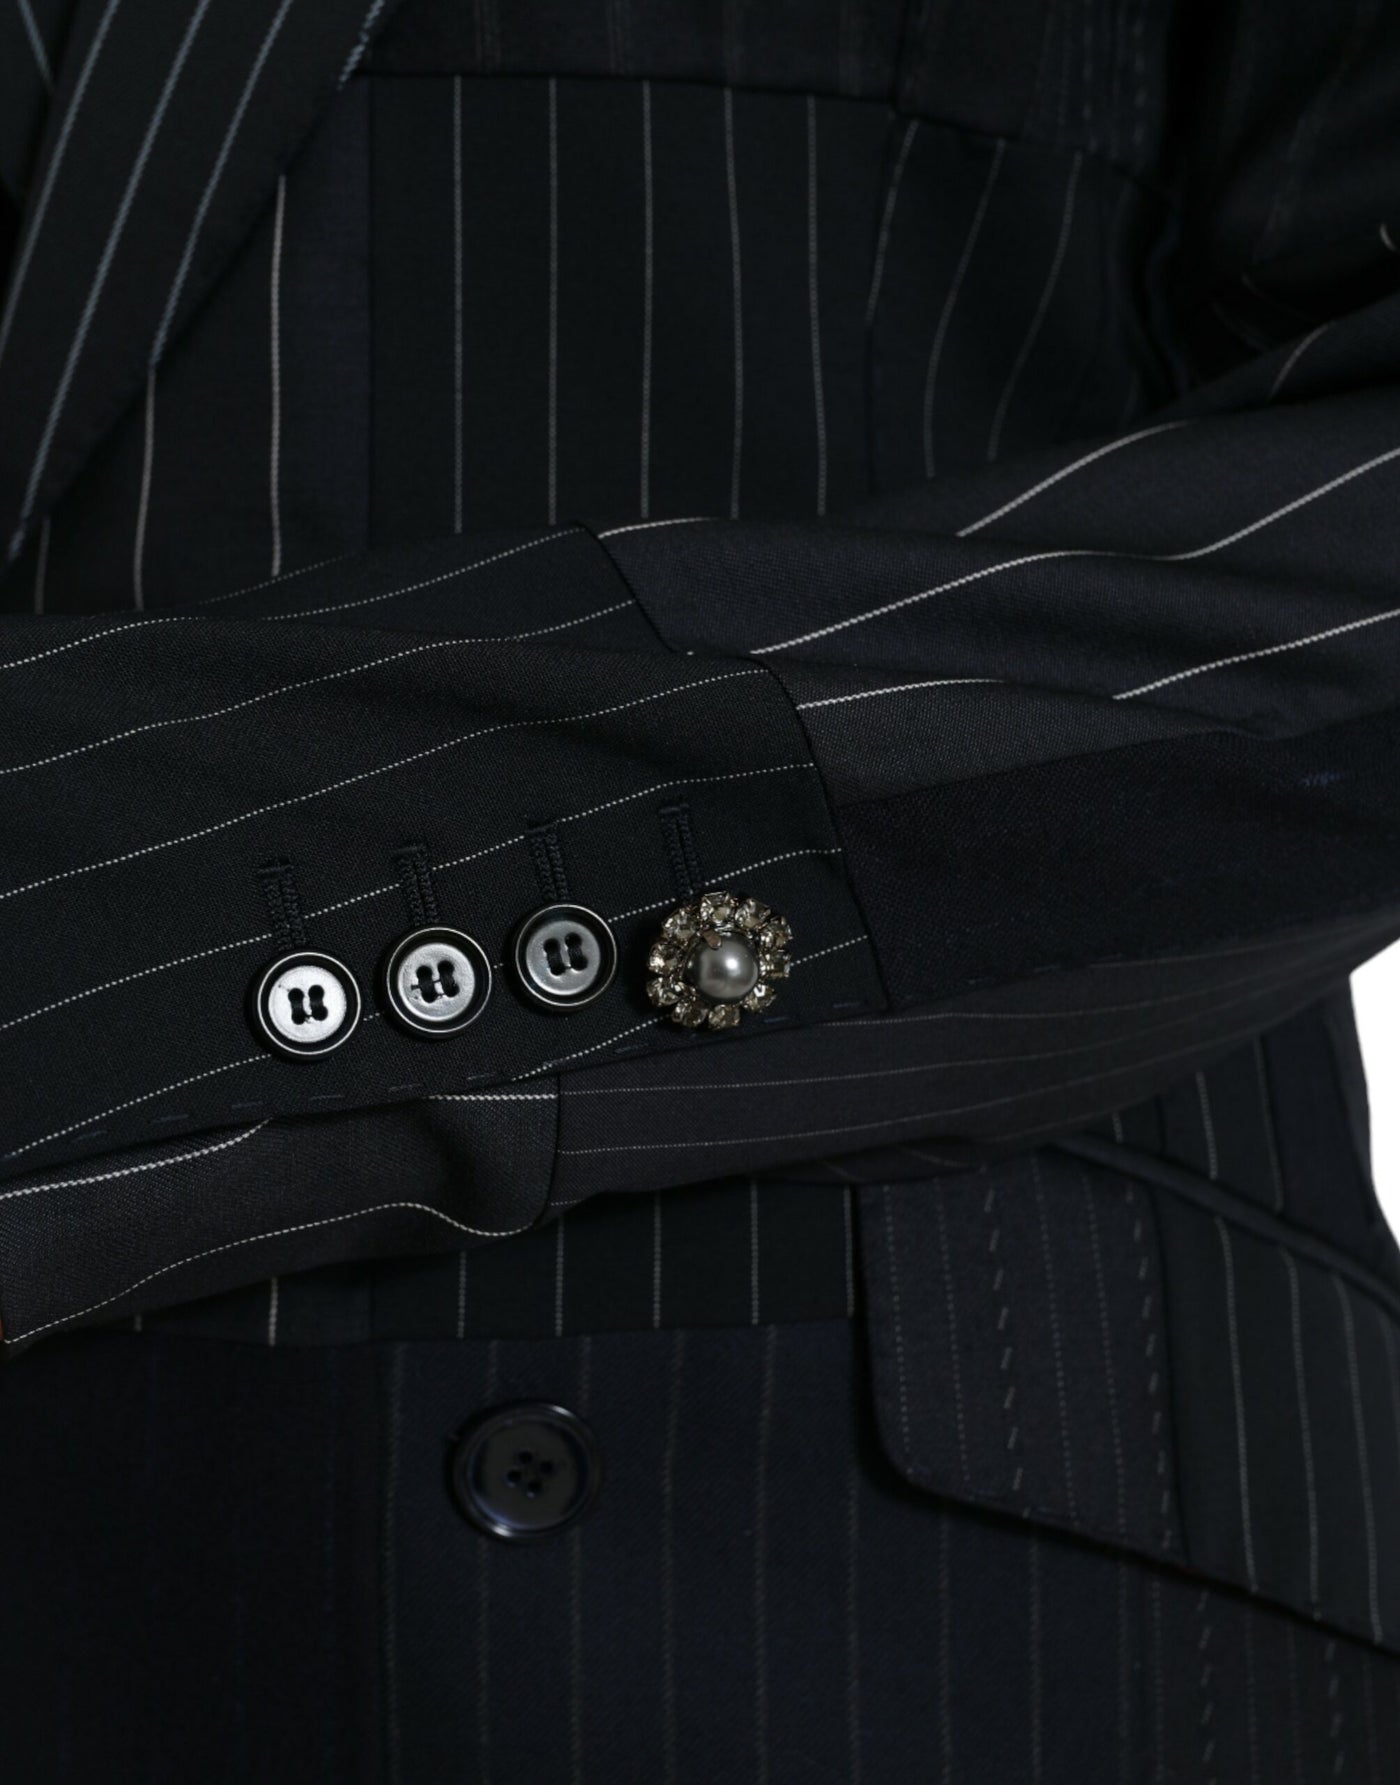 Dolce & Gabbana Black Striped Wool DoubleBreasted Coat Jacket